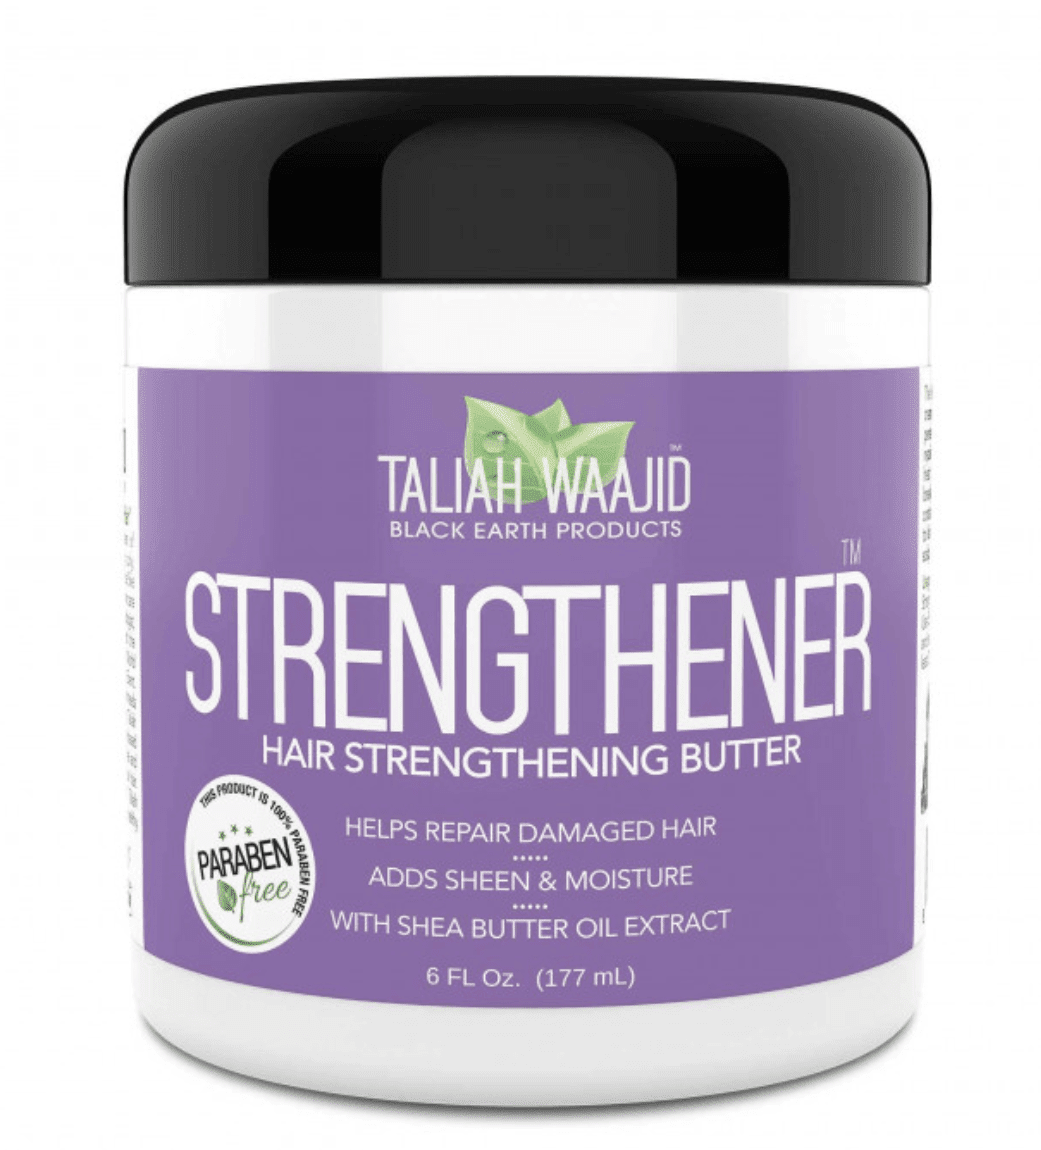 Taliah Waajid - Black Earth Products - Hair butter "strengthener" - 177ml - Taliah Waajid - Ethni Beauty Market